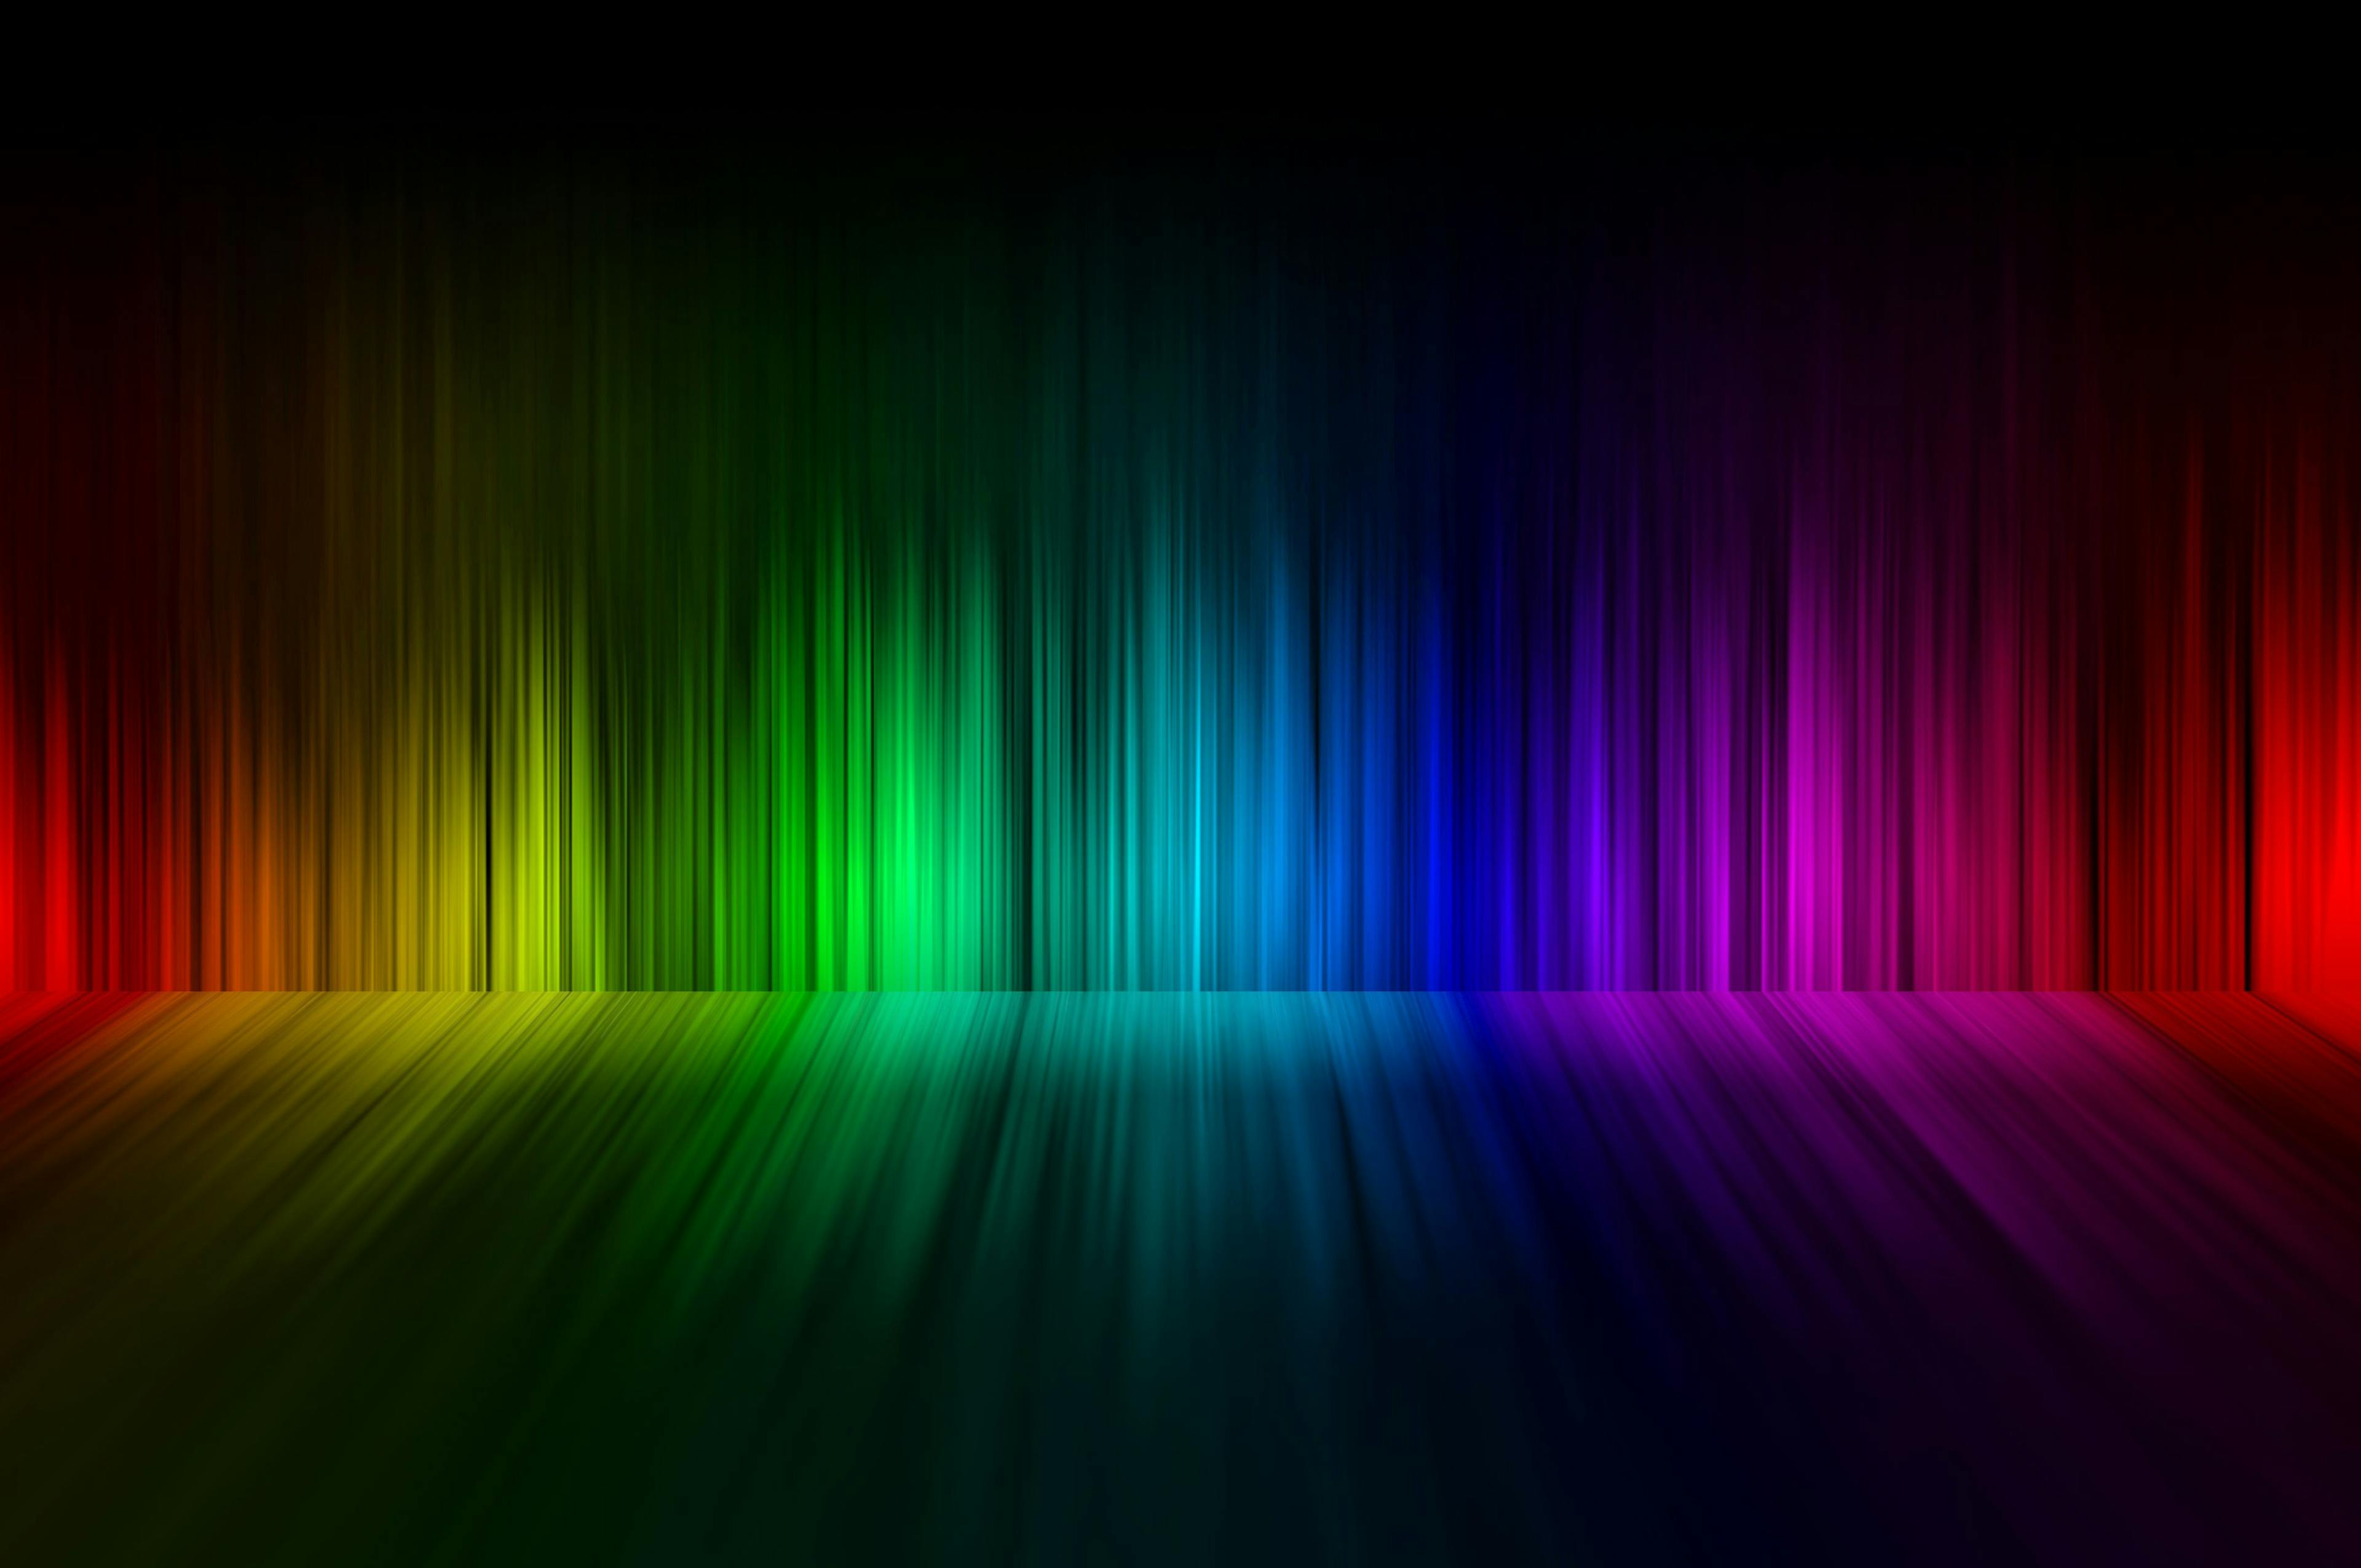 Full spectrum rainbow with reflection | Image Credit: © bdavid32 - stock.adobe.com